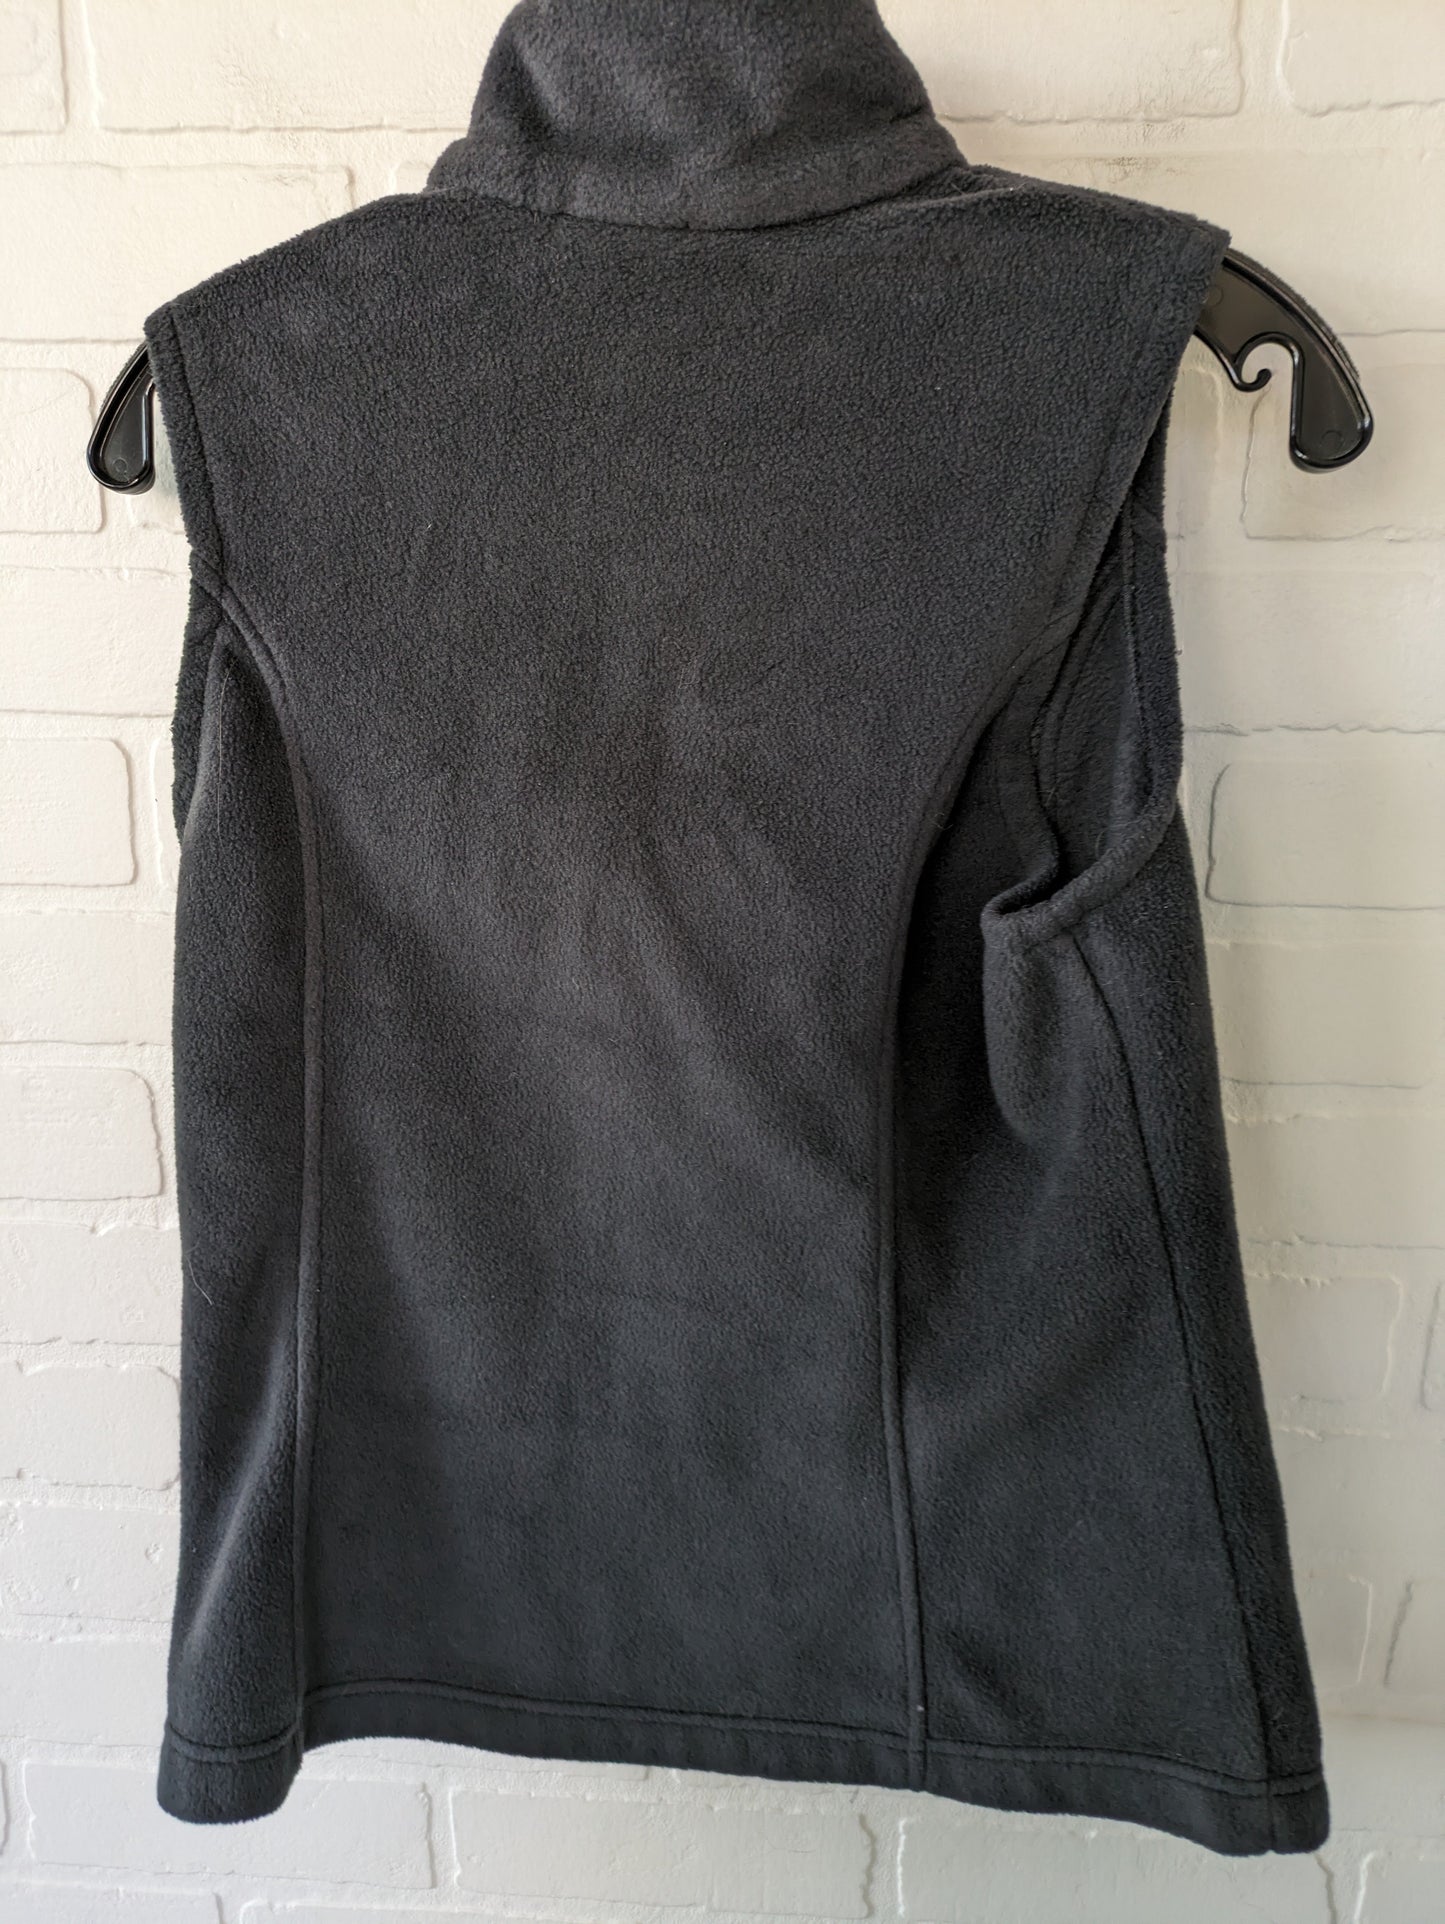 Vest Fleece By Columbia  Size: S